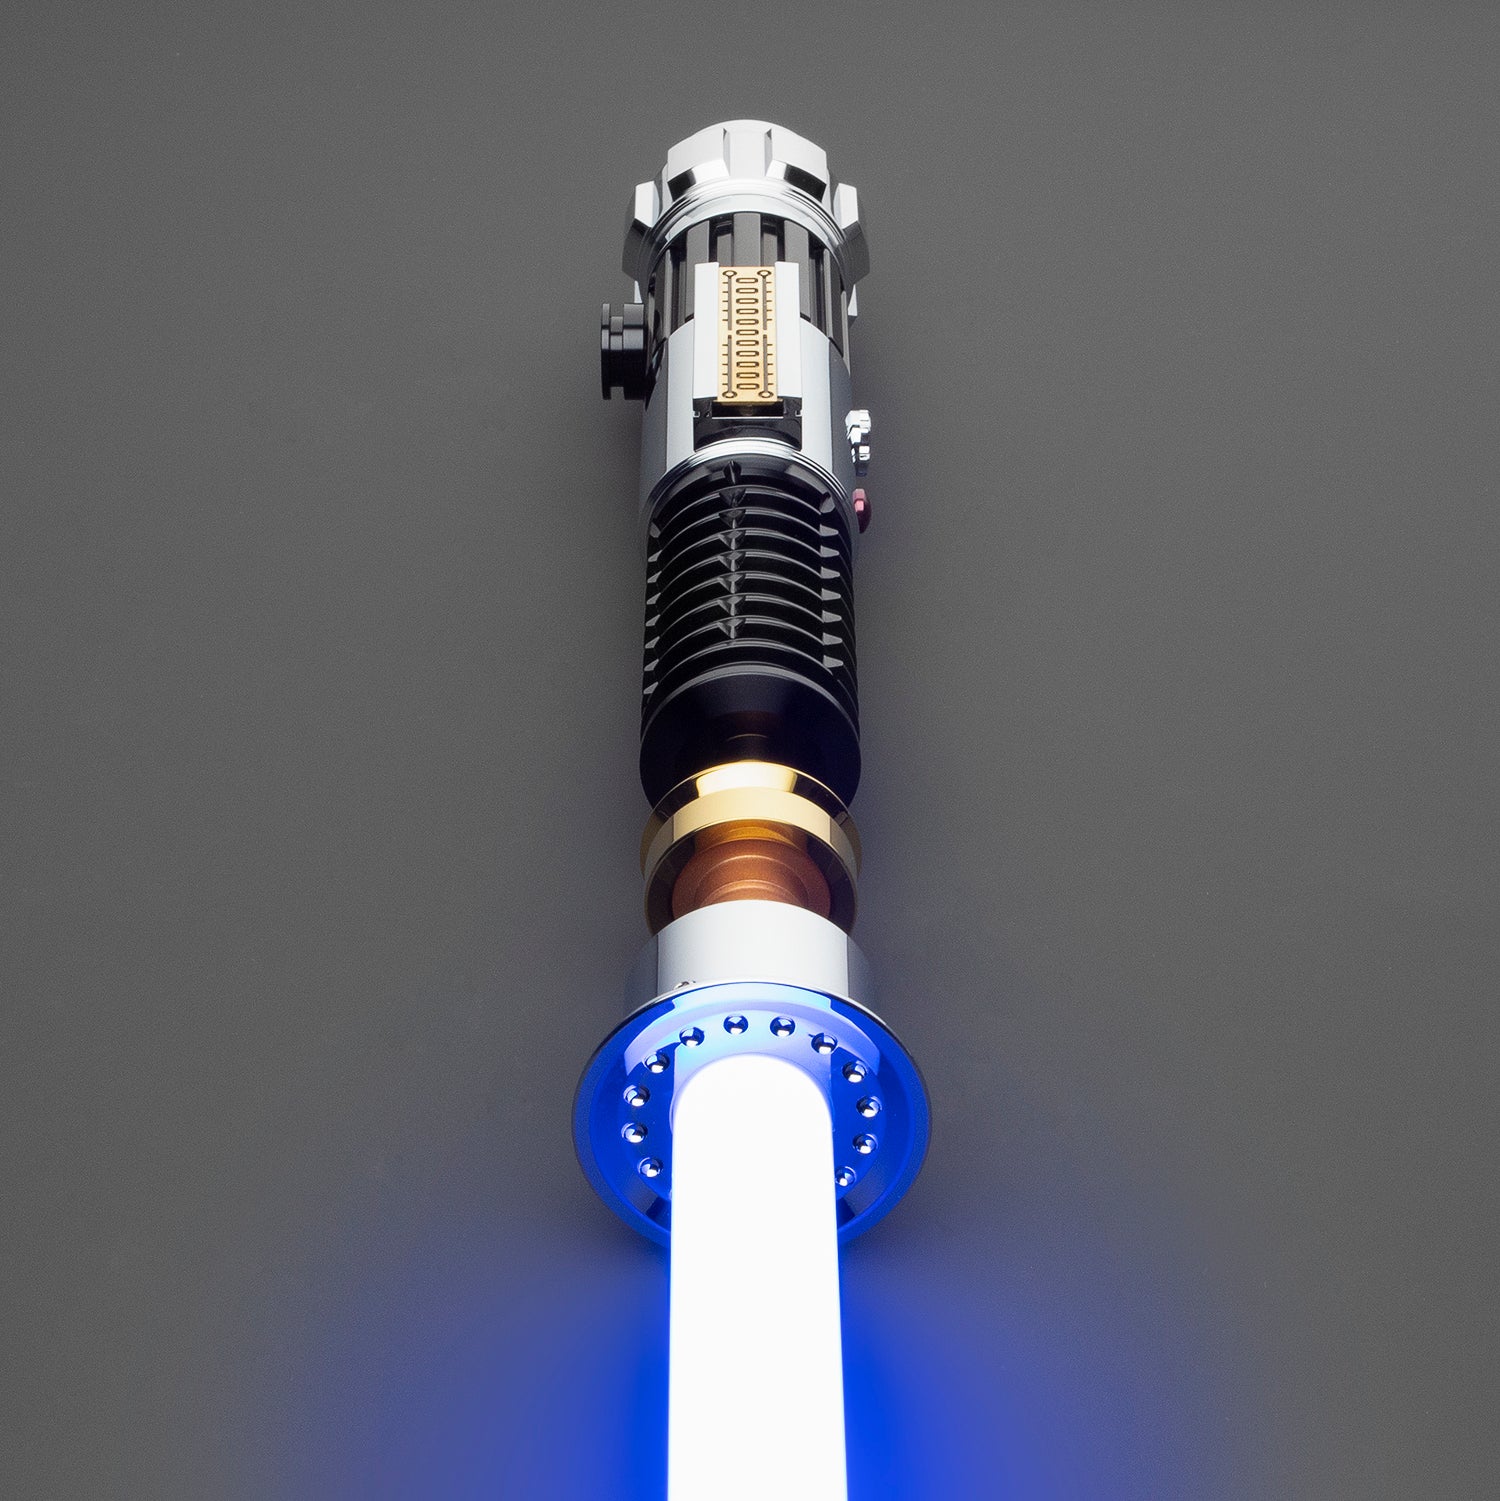 SaberCustom Obi Wan lightsaber NO072